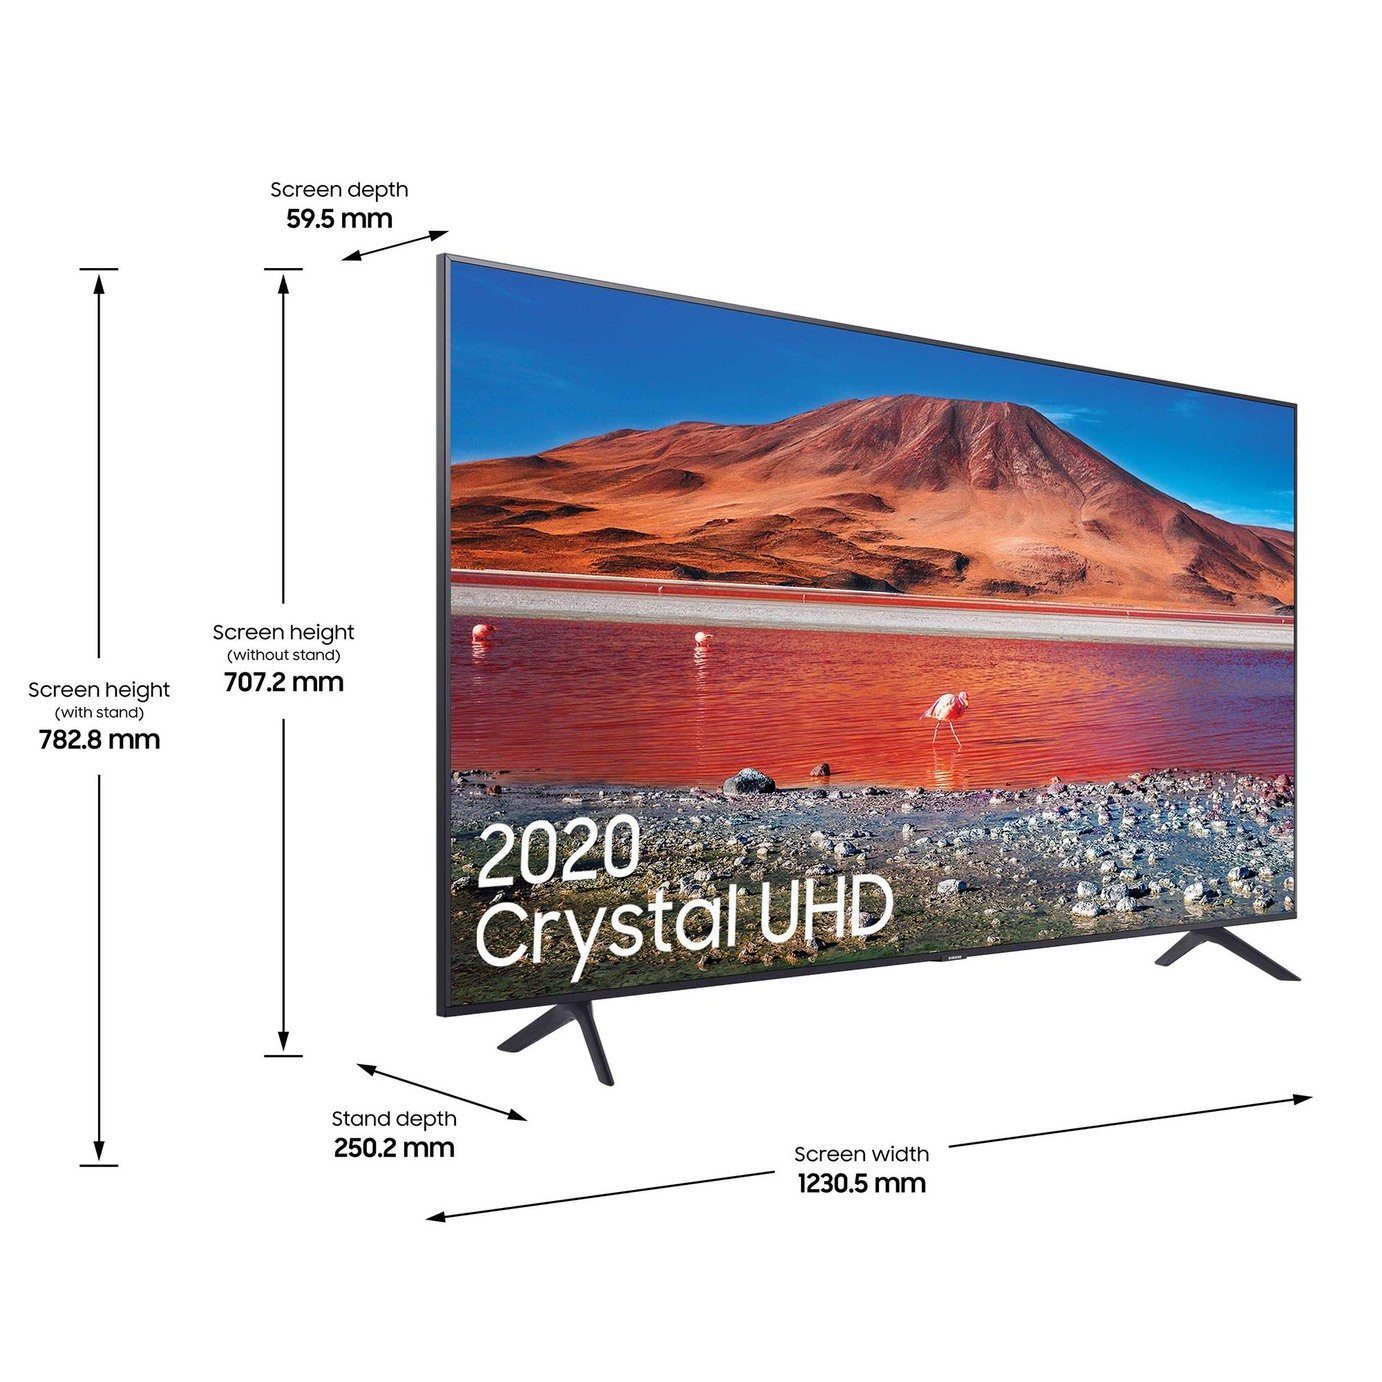 Samsung 55 Inch UE55TU7100 Smart Ultra HD TV Review